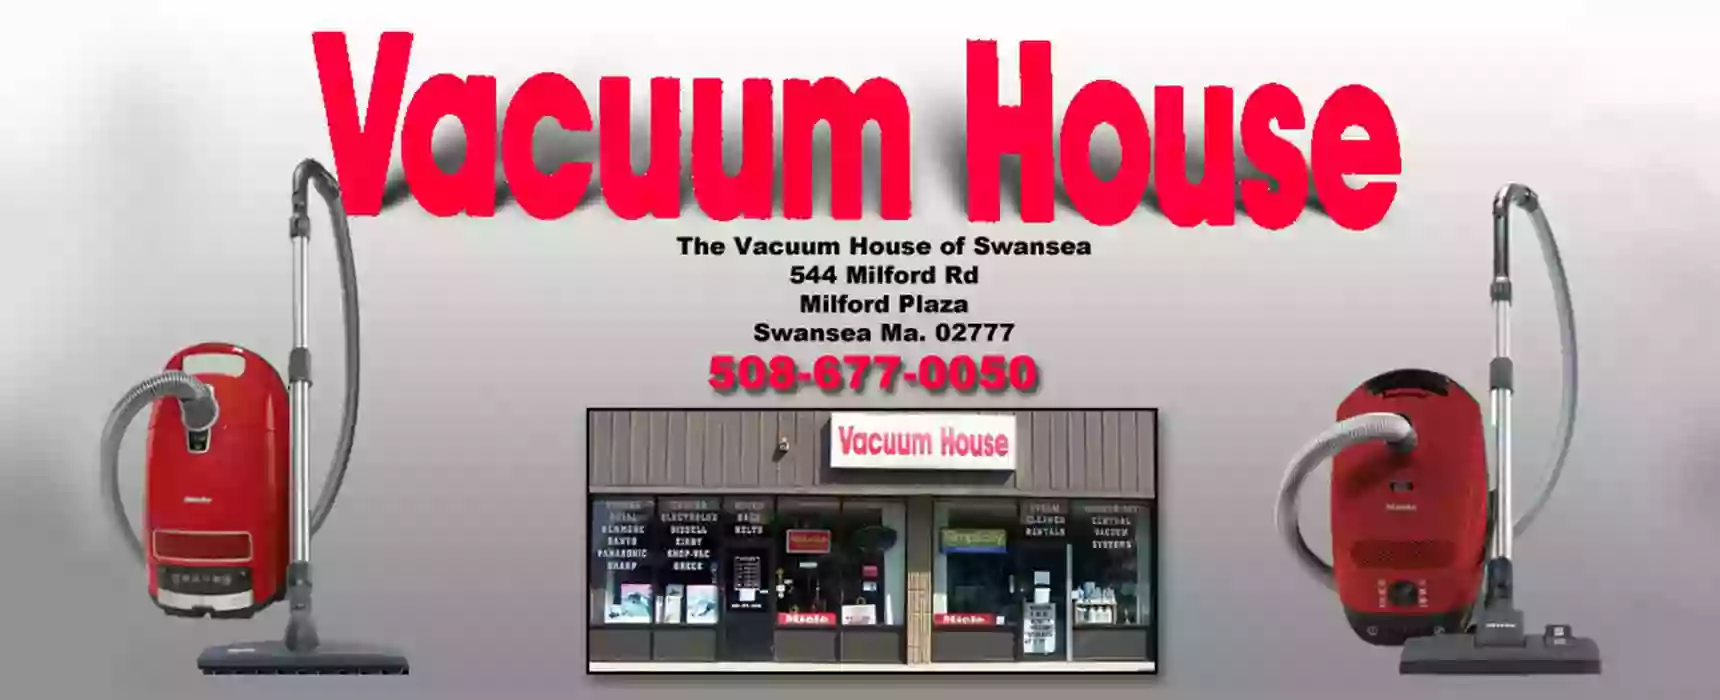 The Vacuum House